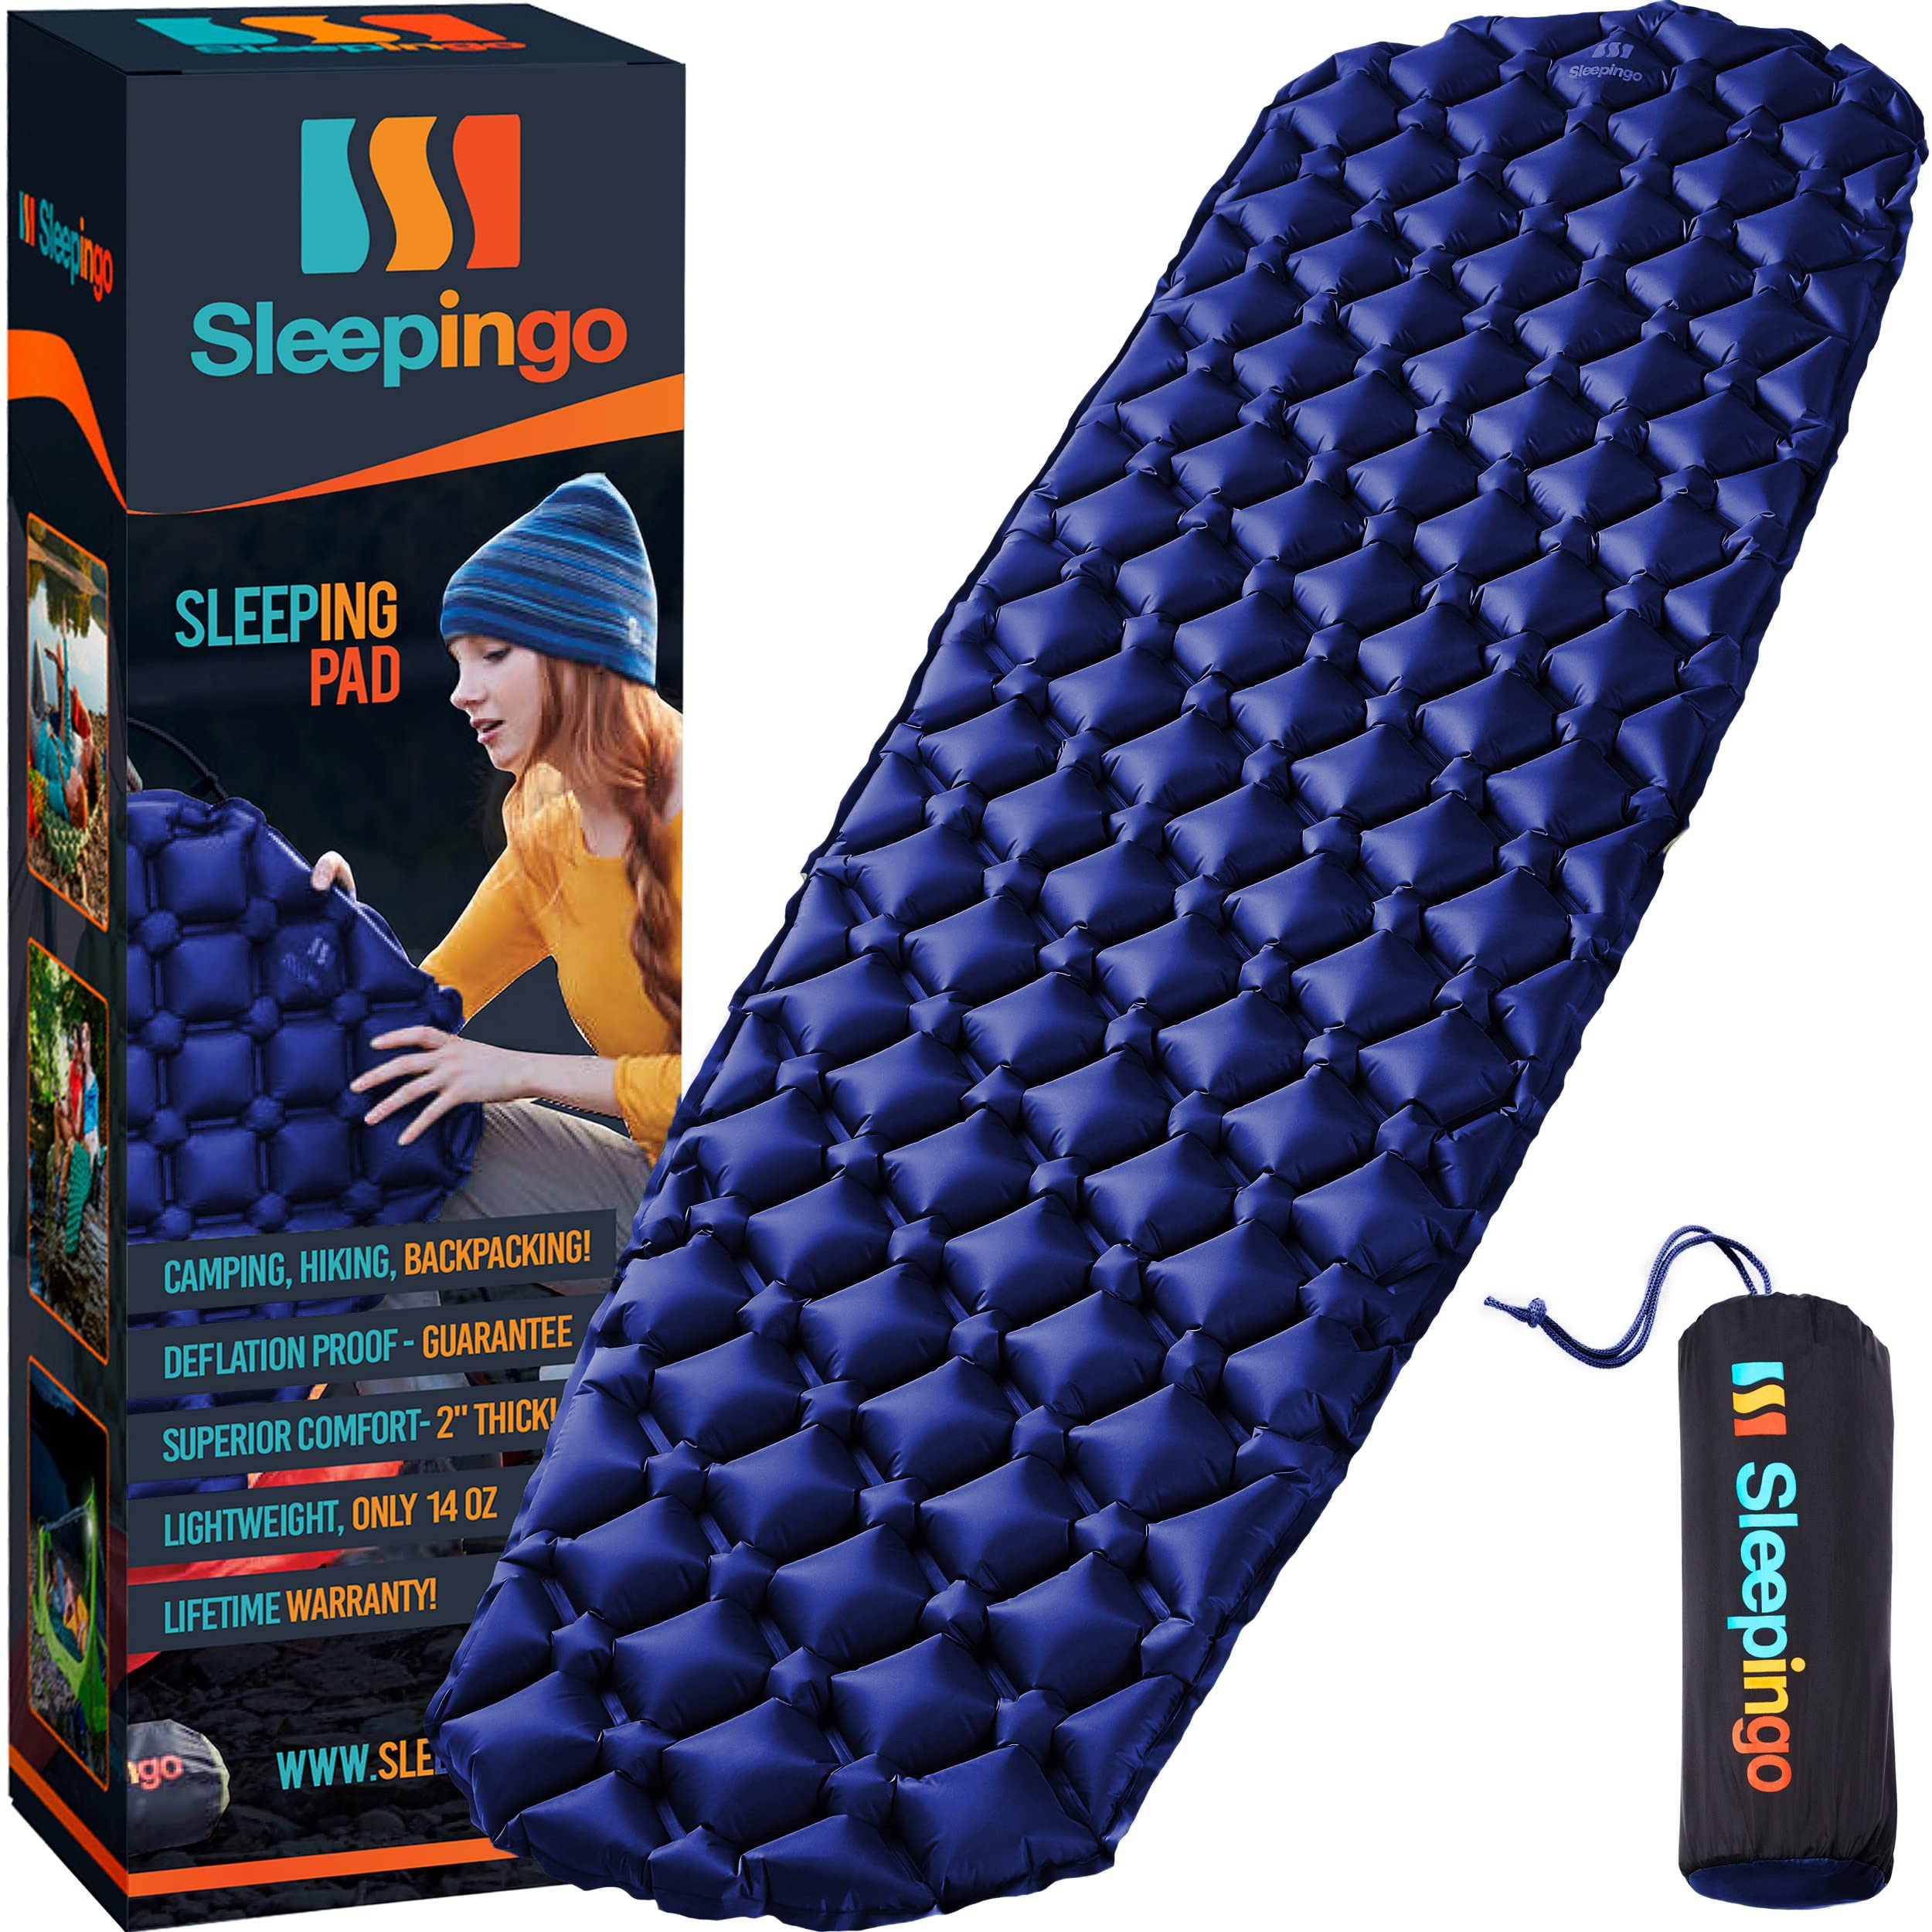 Sleepingo Sleeping Pad for Camping - Ultralight Sleeping Mat for Camping, Backpacking, Hiking - Lightweight, Inflatable Air Mattress - Compact Camping Mats for Sleeping (Blue)  - Very Good